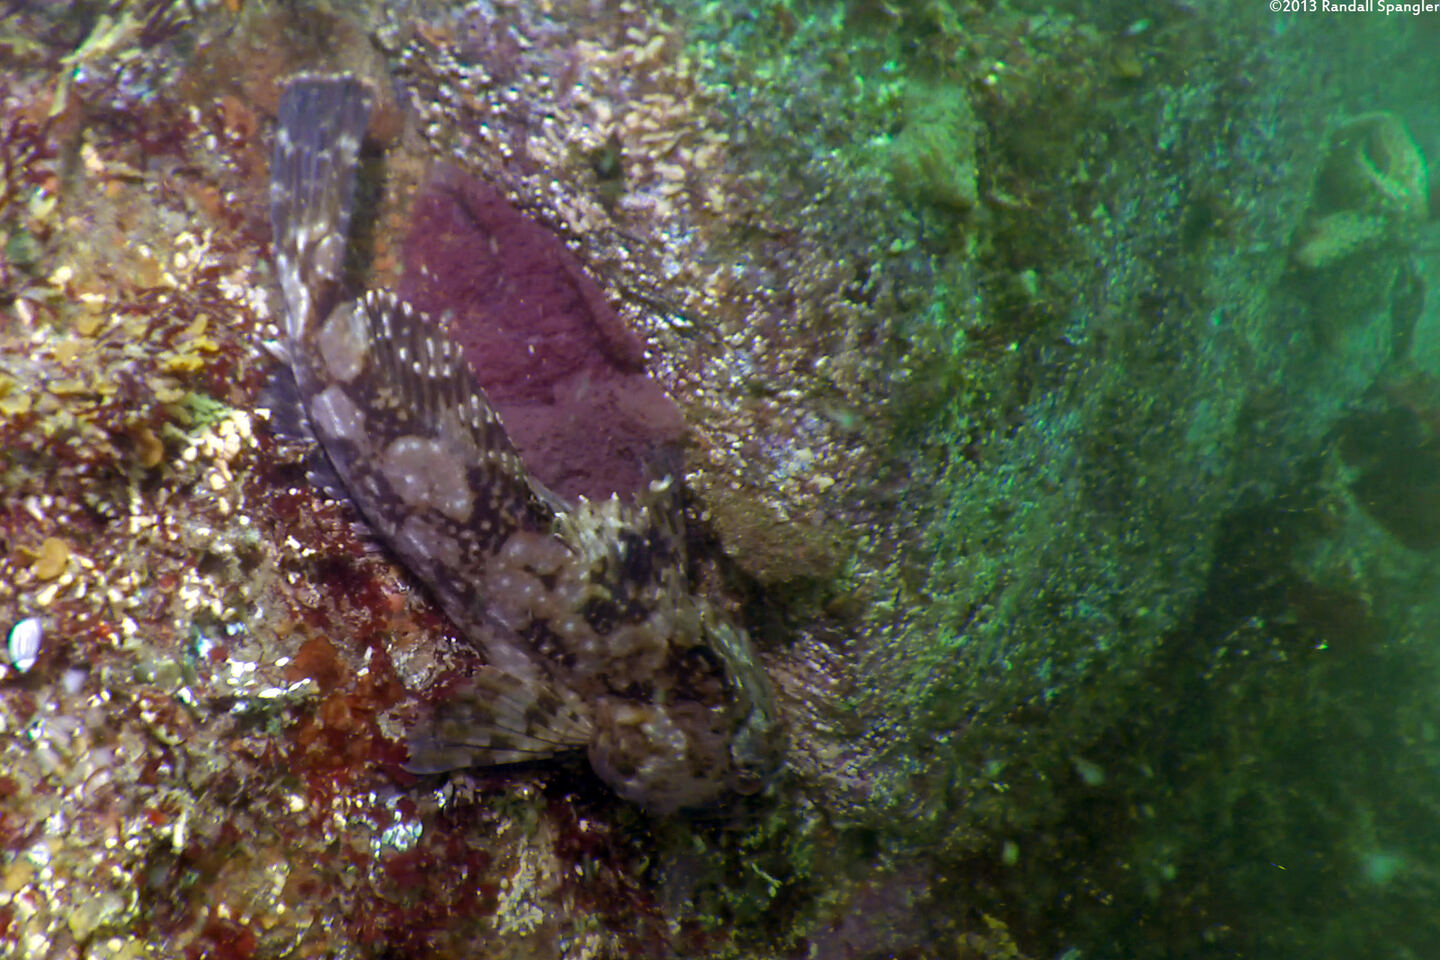 Scorpaenichthys marmoratus (Cabezon); Guarding eggs